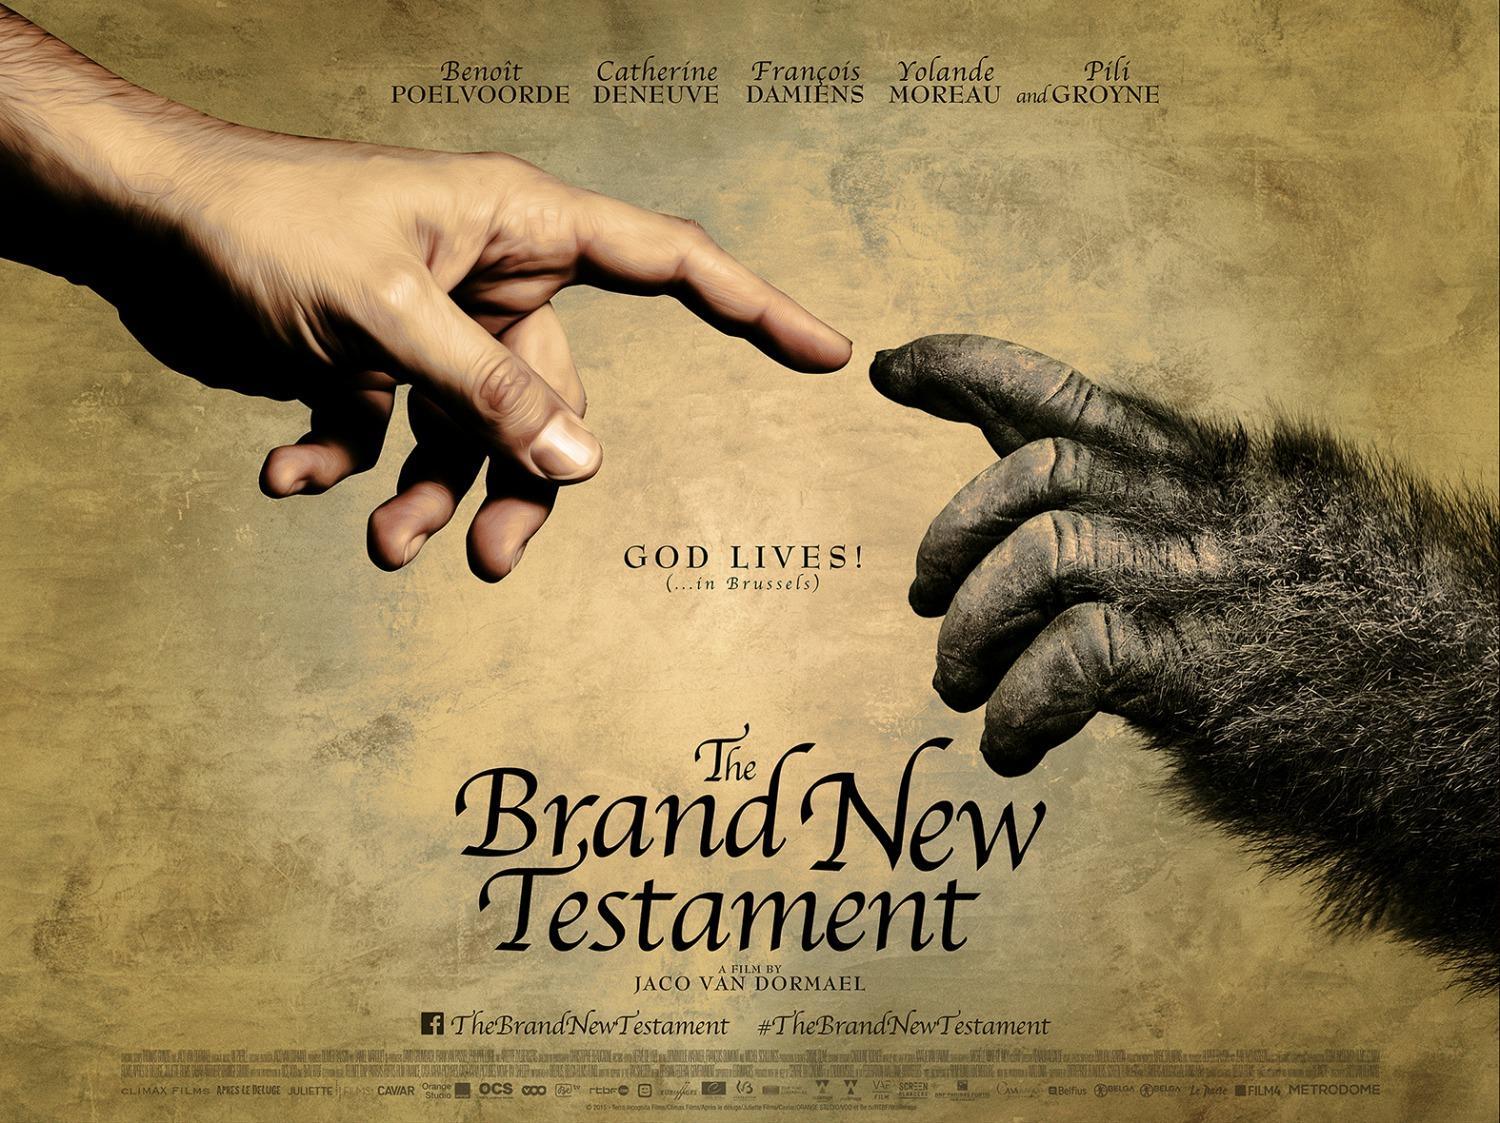 aan de andere kant, Fractie koppeling Image gallery for The Brand New Testament - FilmAffinity